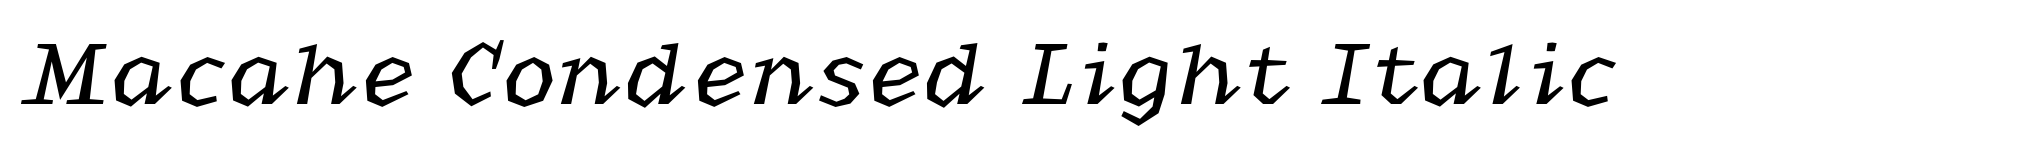 Macahe Condensed Light Italic image